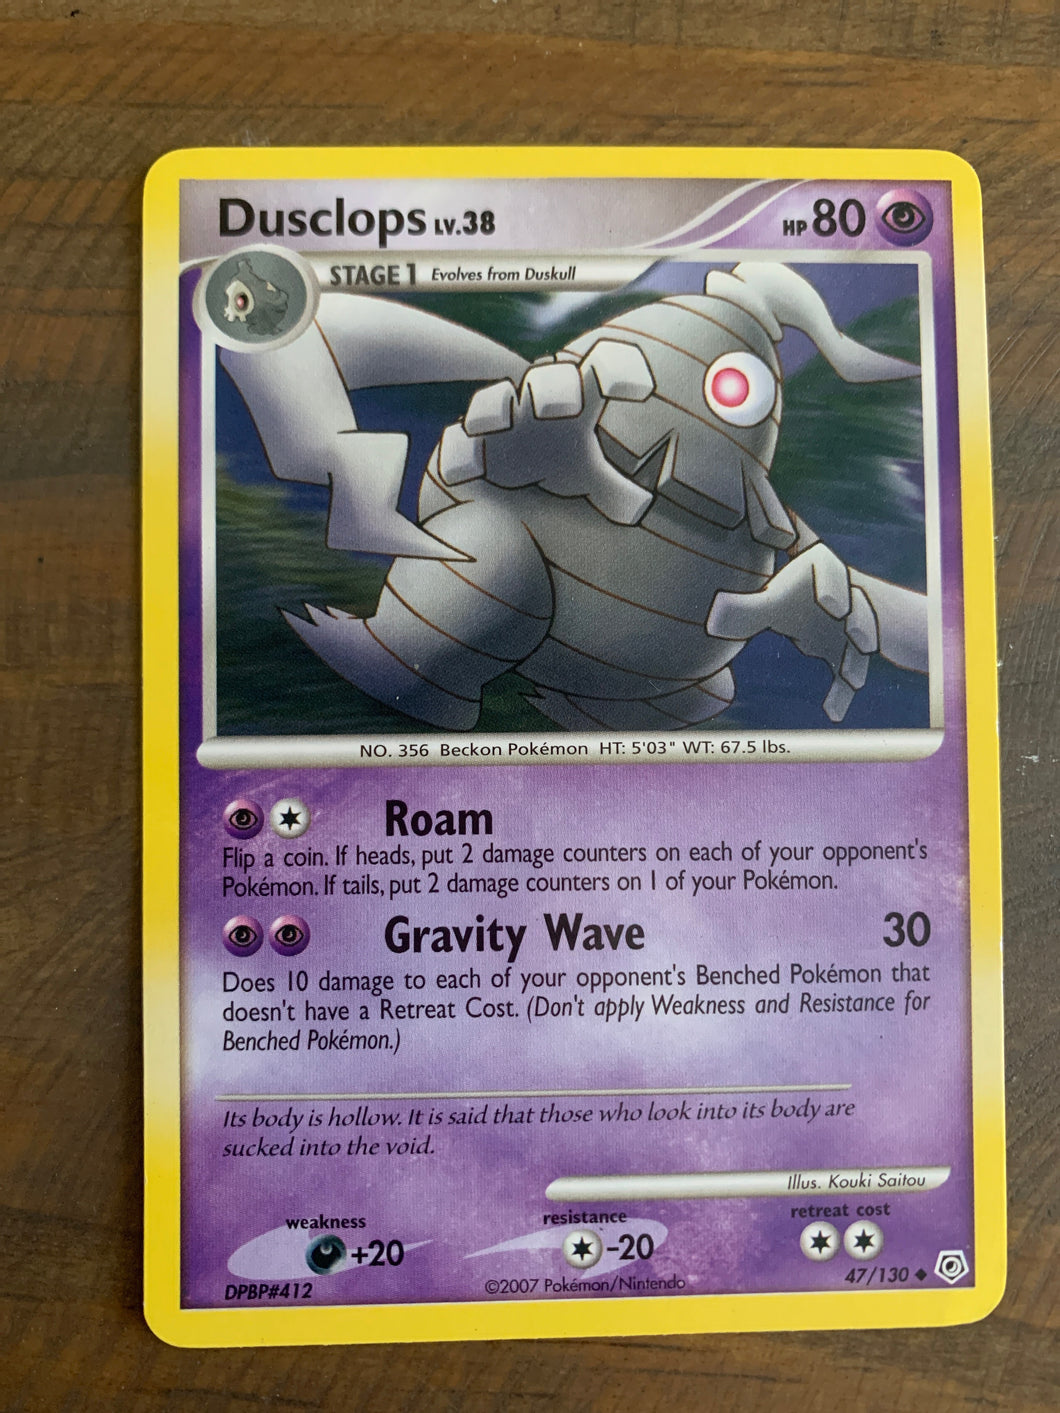 2007 Dusclops Pokémon Trading Card